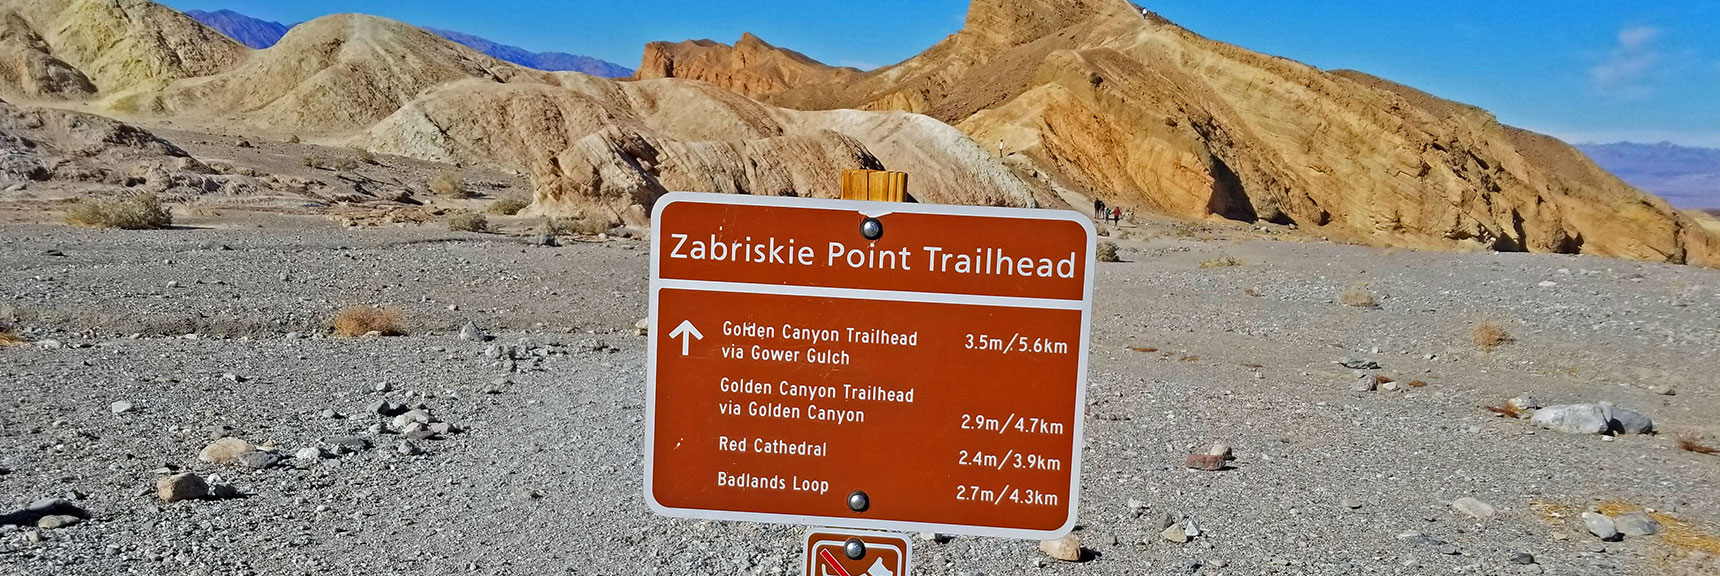 Official Zabriskie Point Trailhead Toward Gower Gulch and Golden Canyon. | Golden Canyon to Zabriskie Point | Death Valley National Park, California